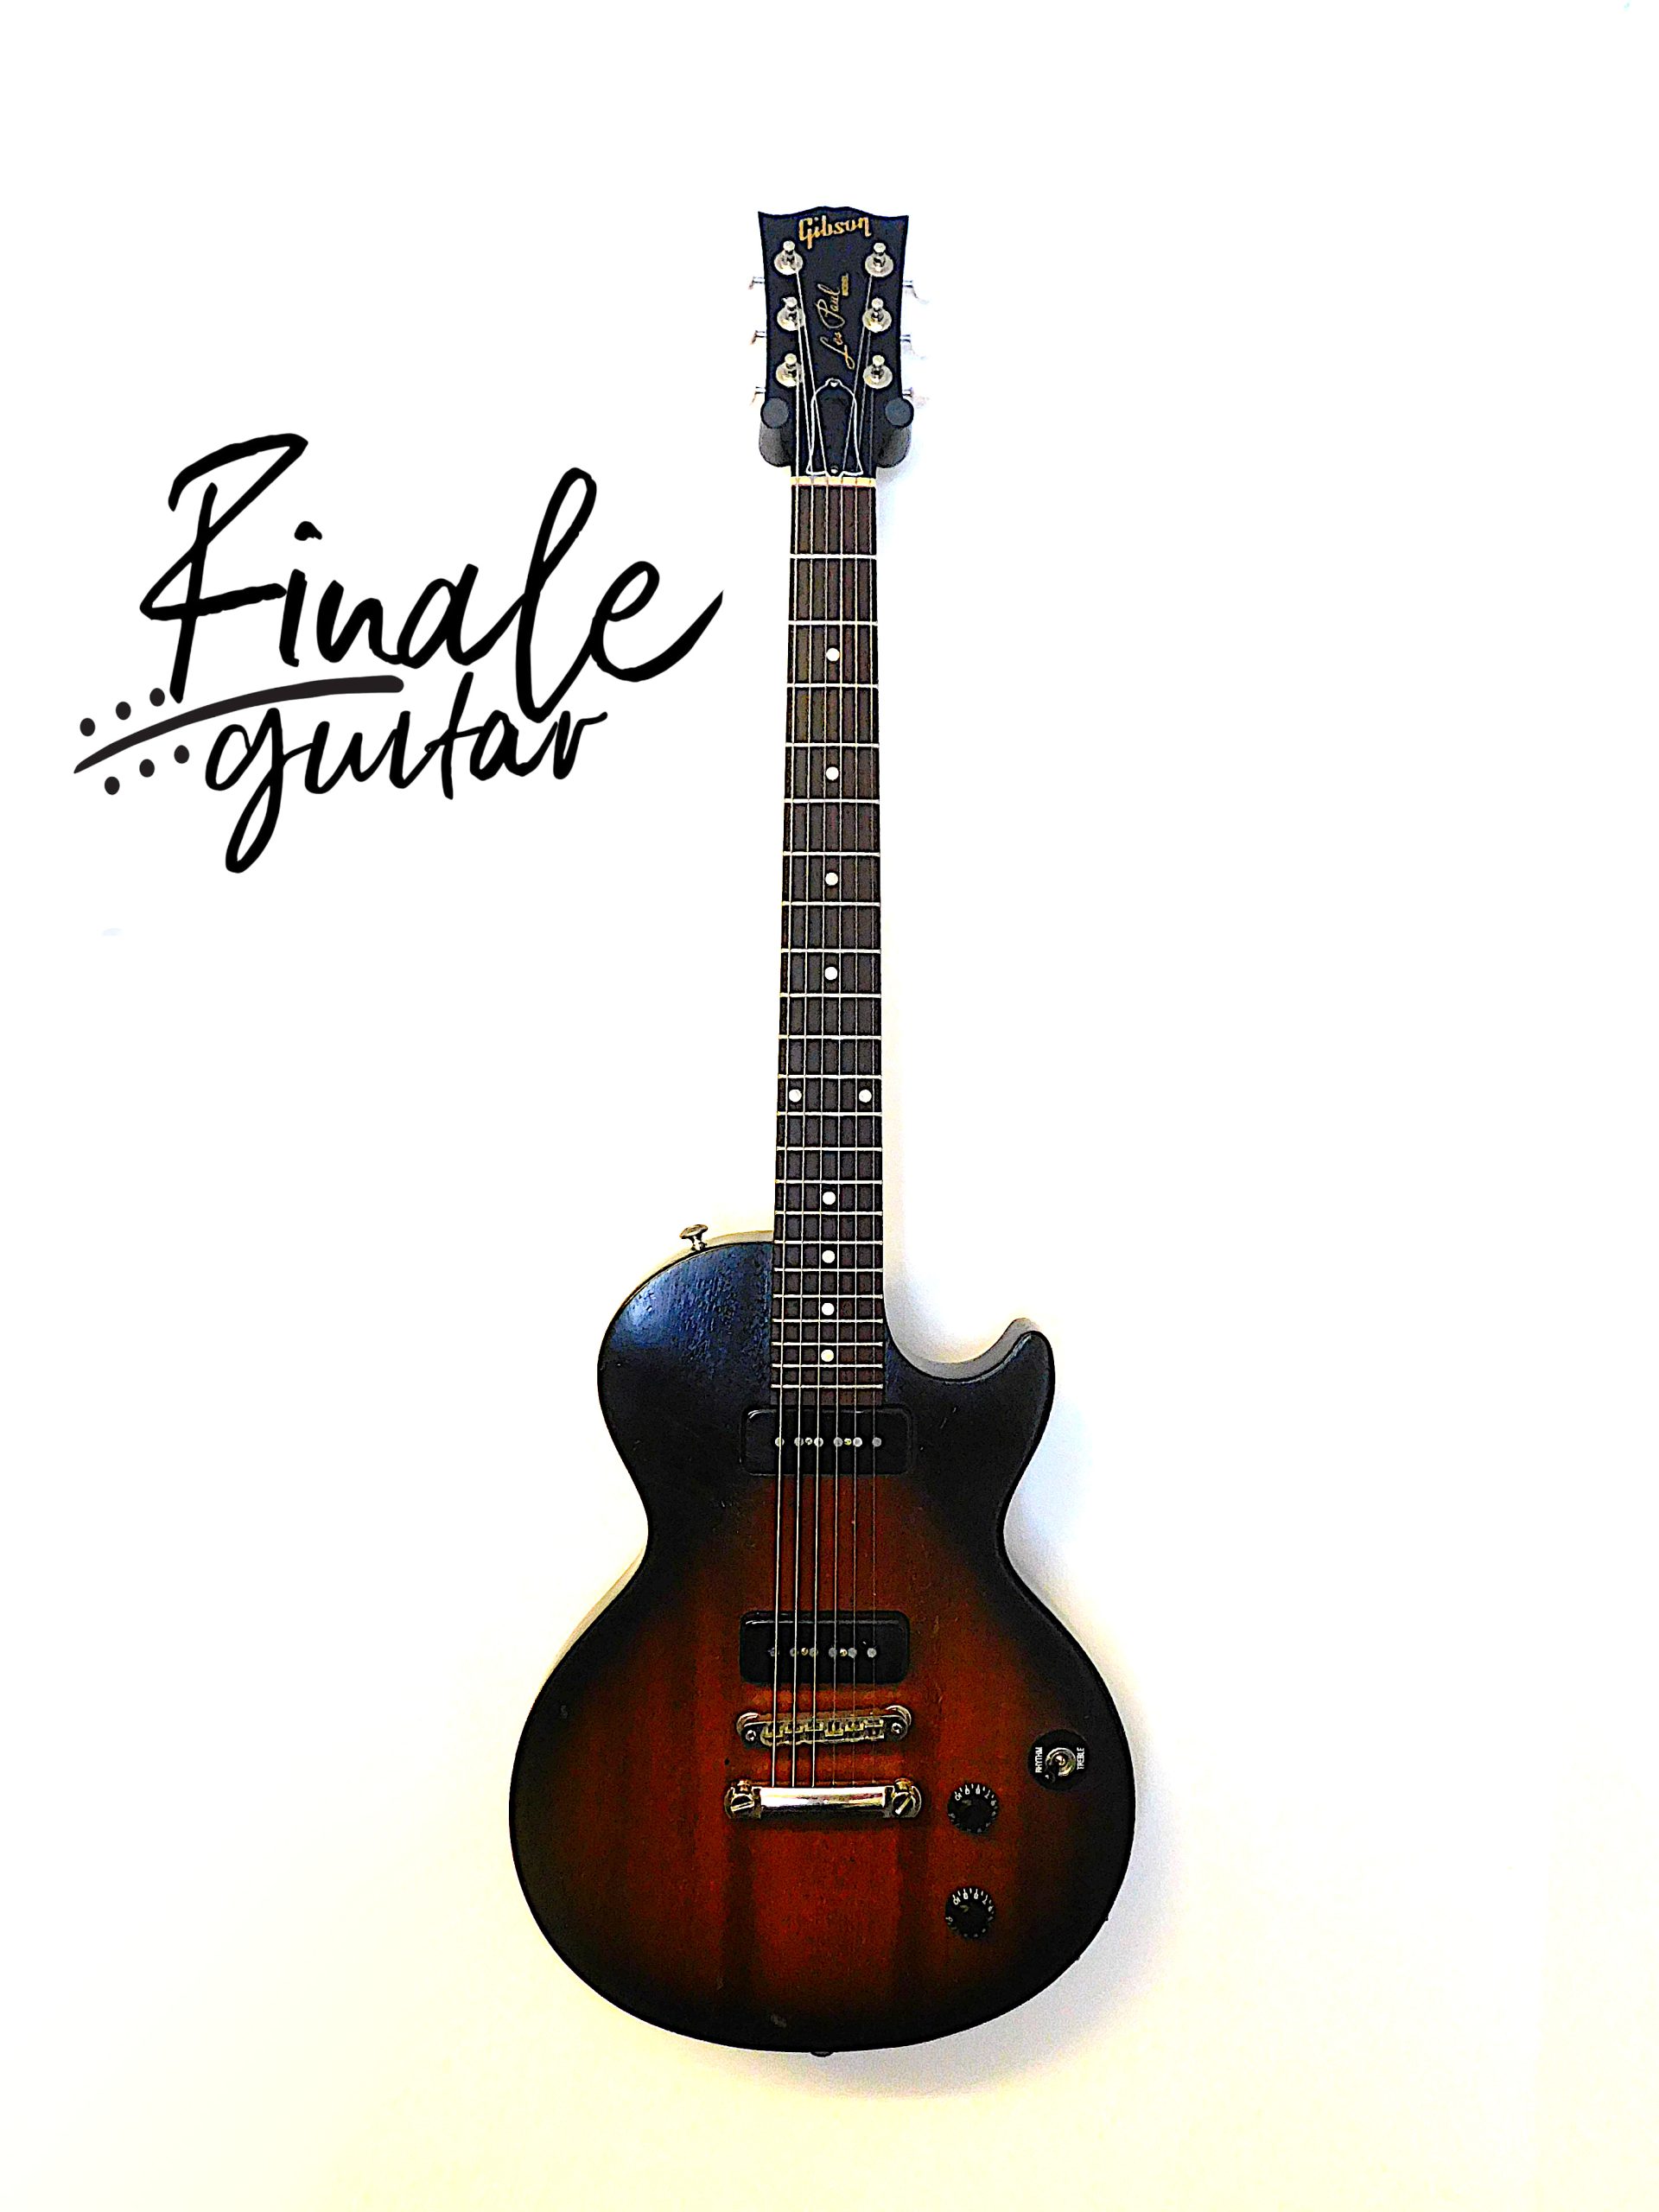 Gibson Les Paul Junior Single Coil 2016 - Vintage Sunburst, with gig bag for sale in our Sheffield Guitar shop, Finale Guitar